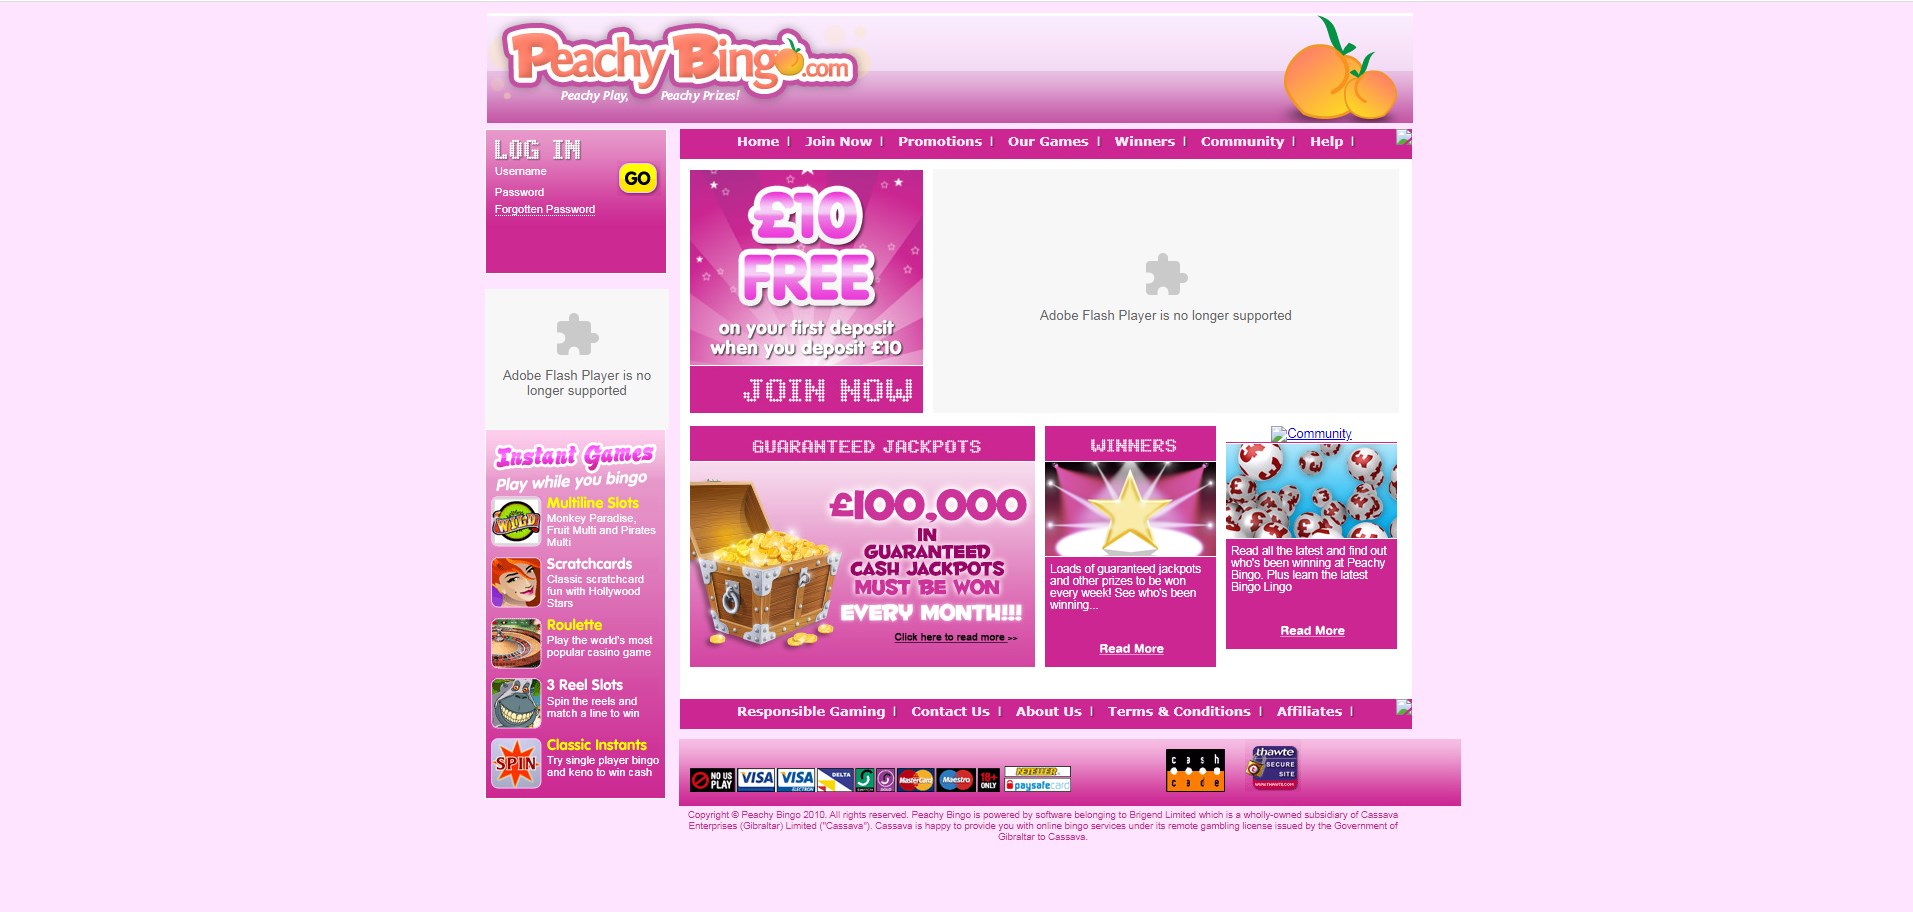 Peachy Bingo Casino Login